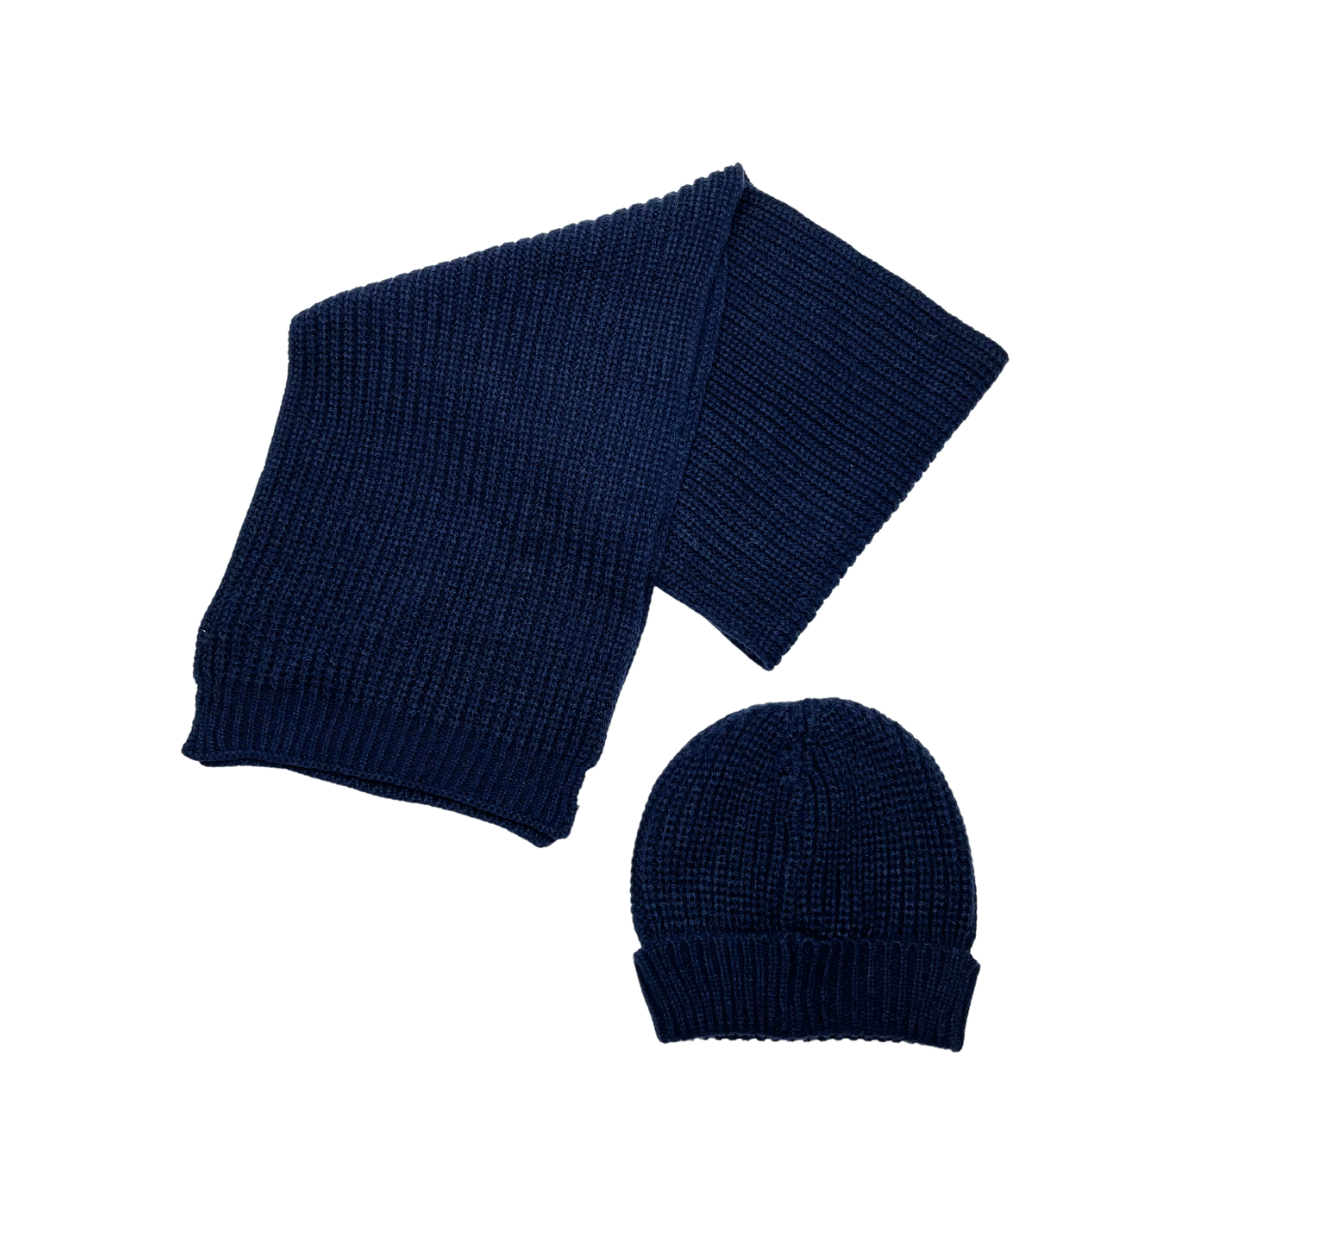 AO76 - Ensemble bonnet écharpe bleu marine - 1 an